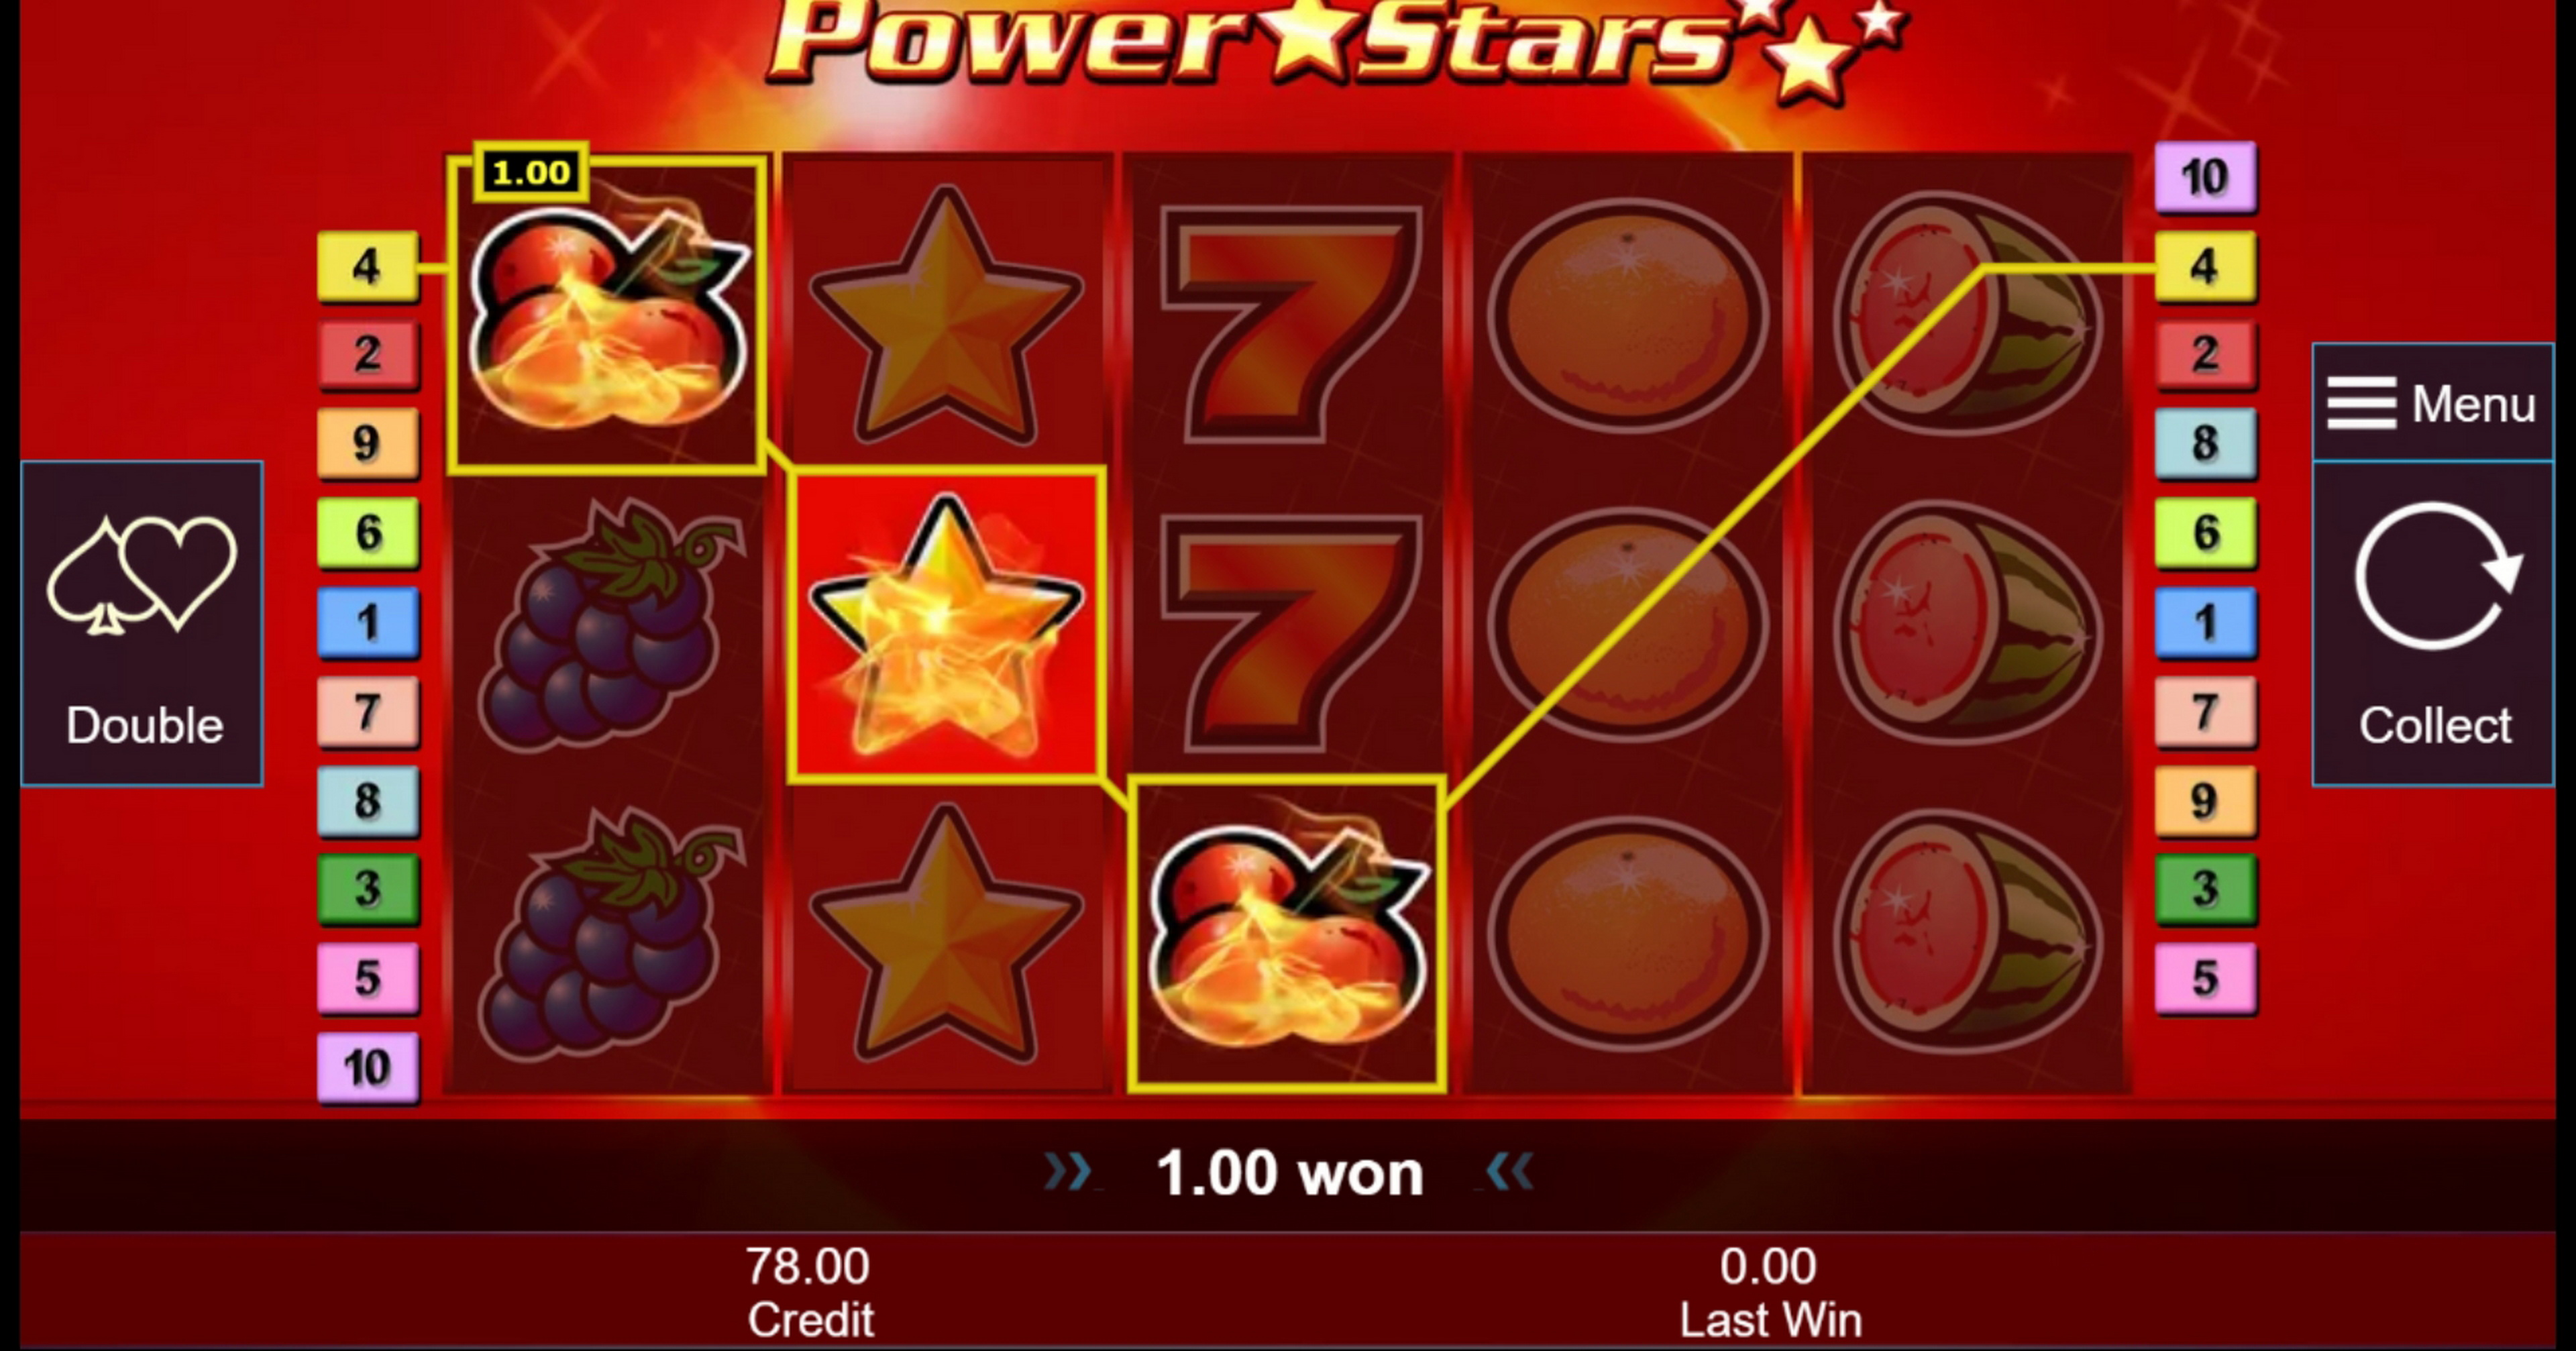 Win Money in Power Stars Free Slot Game by Greentube